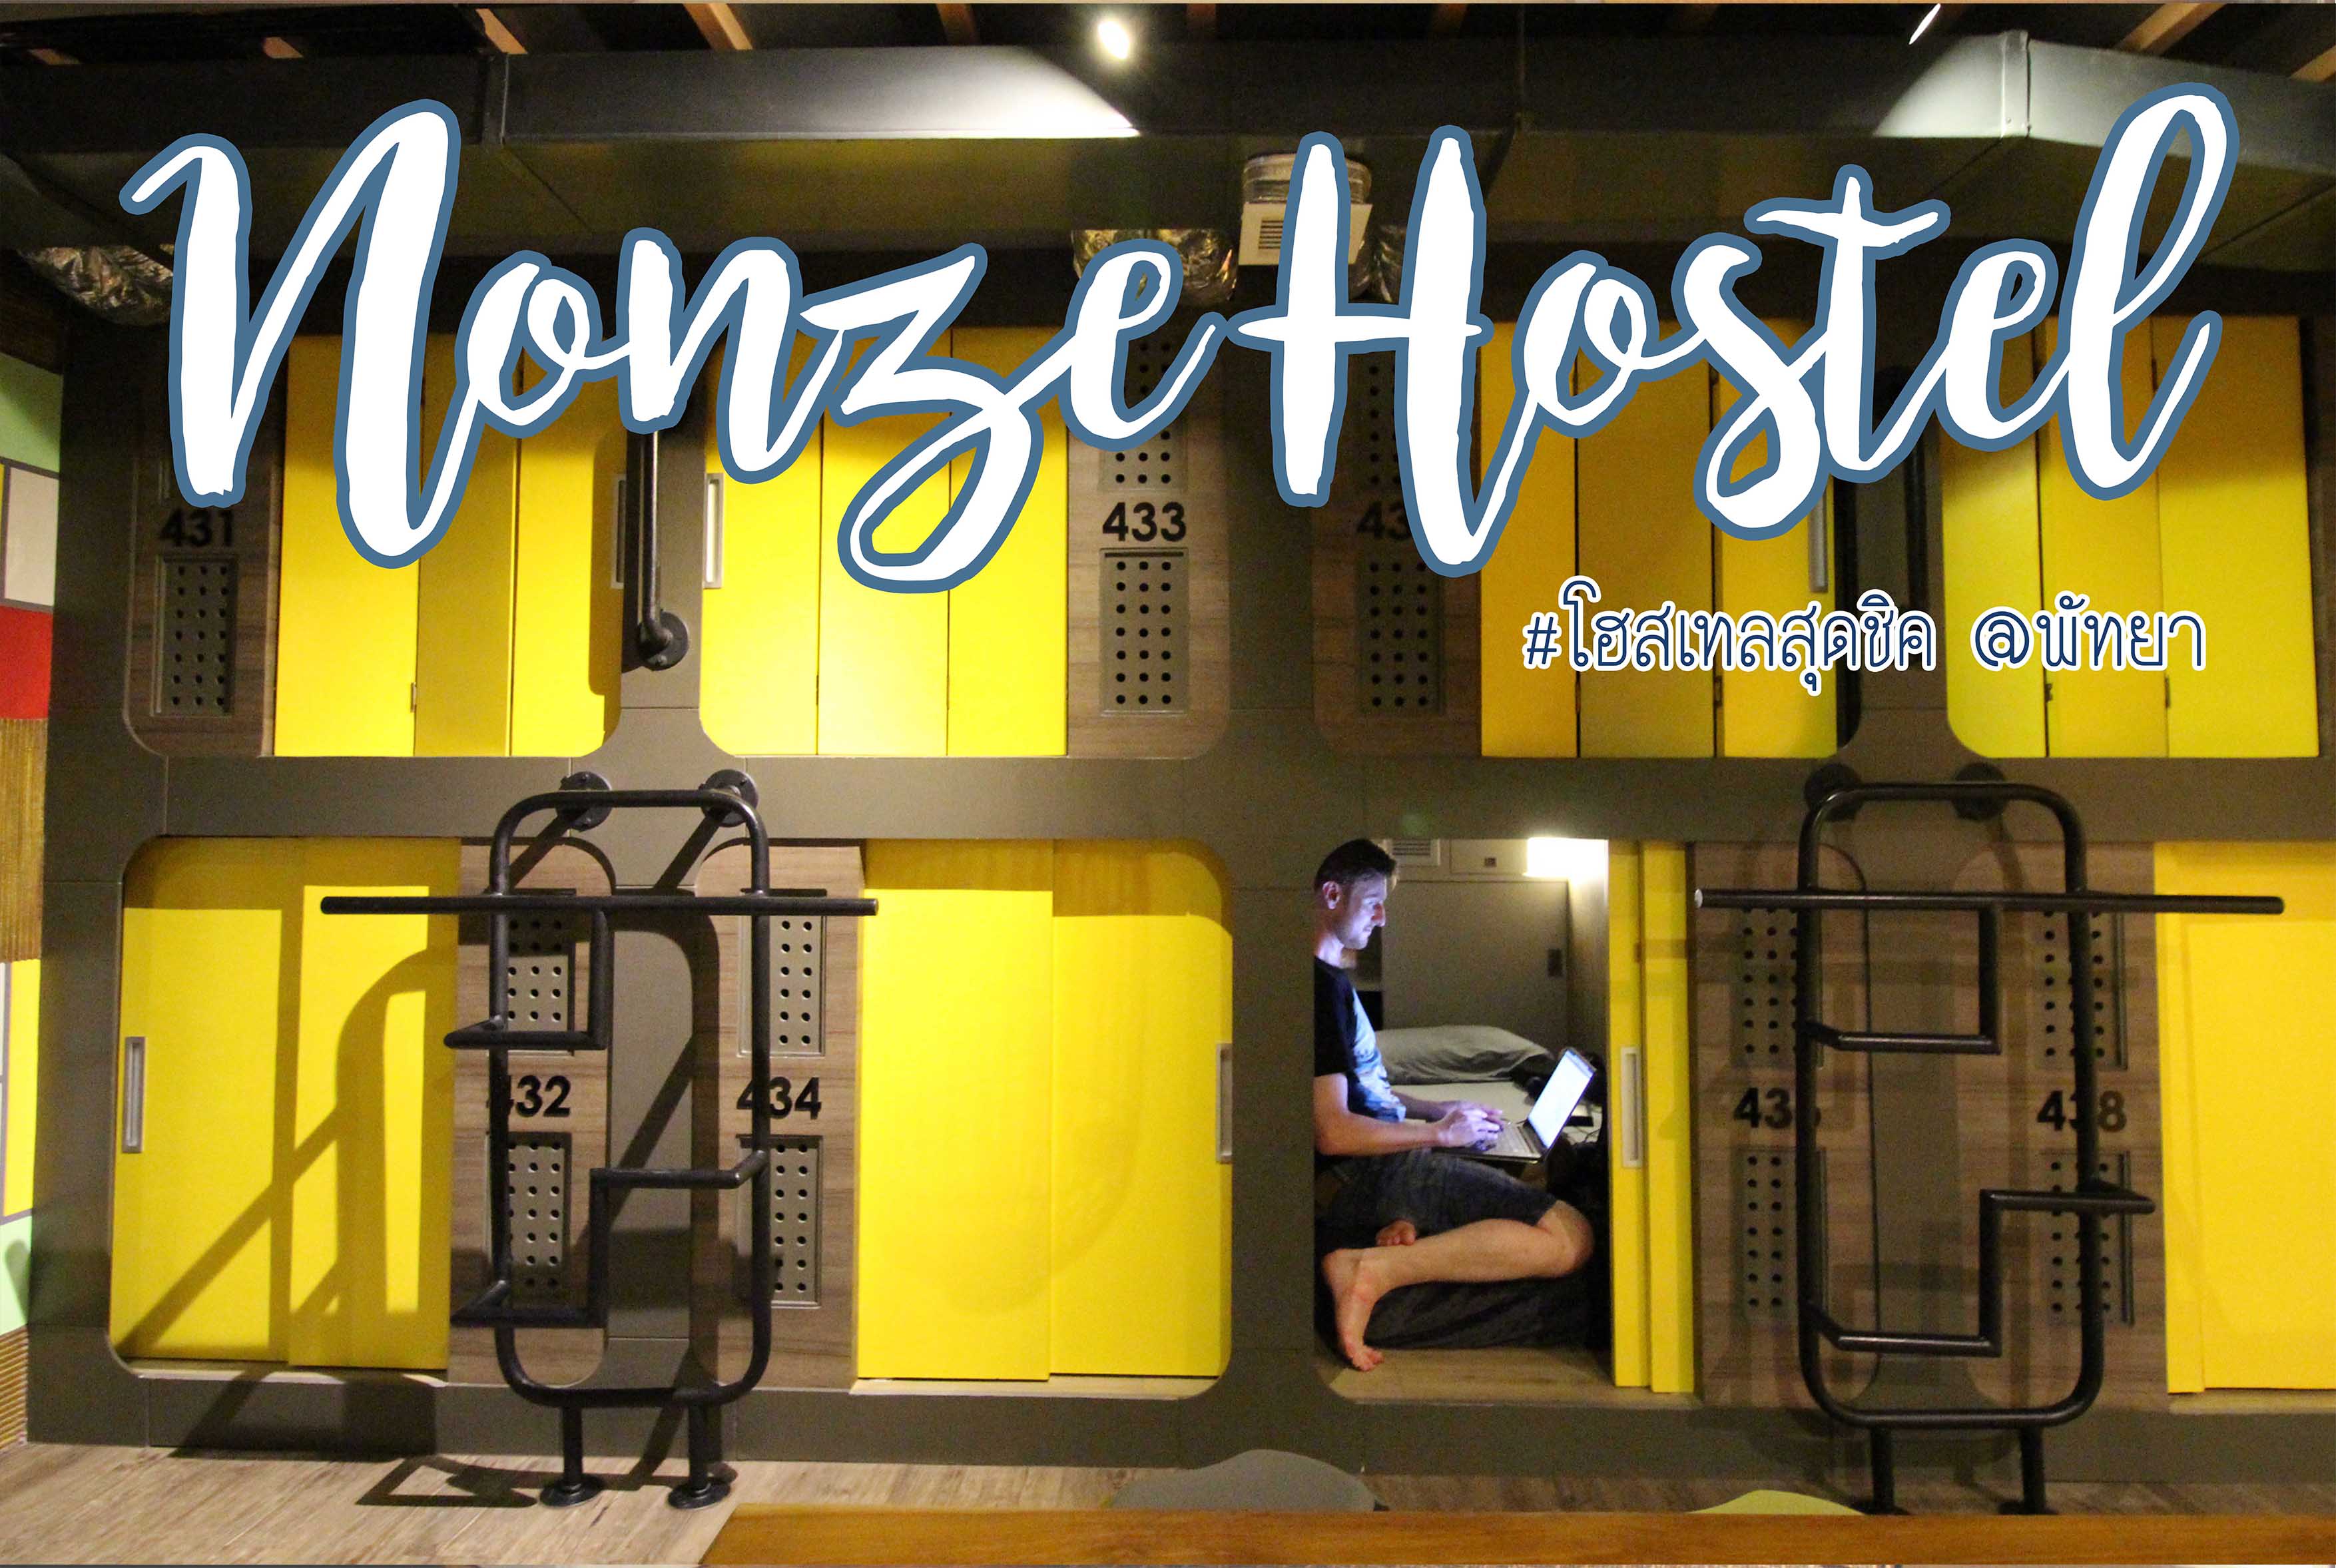 Nonze Hostel โฮสเทลสุดชิคที่พัทยา ราคาน่ารักๆ - Pantip